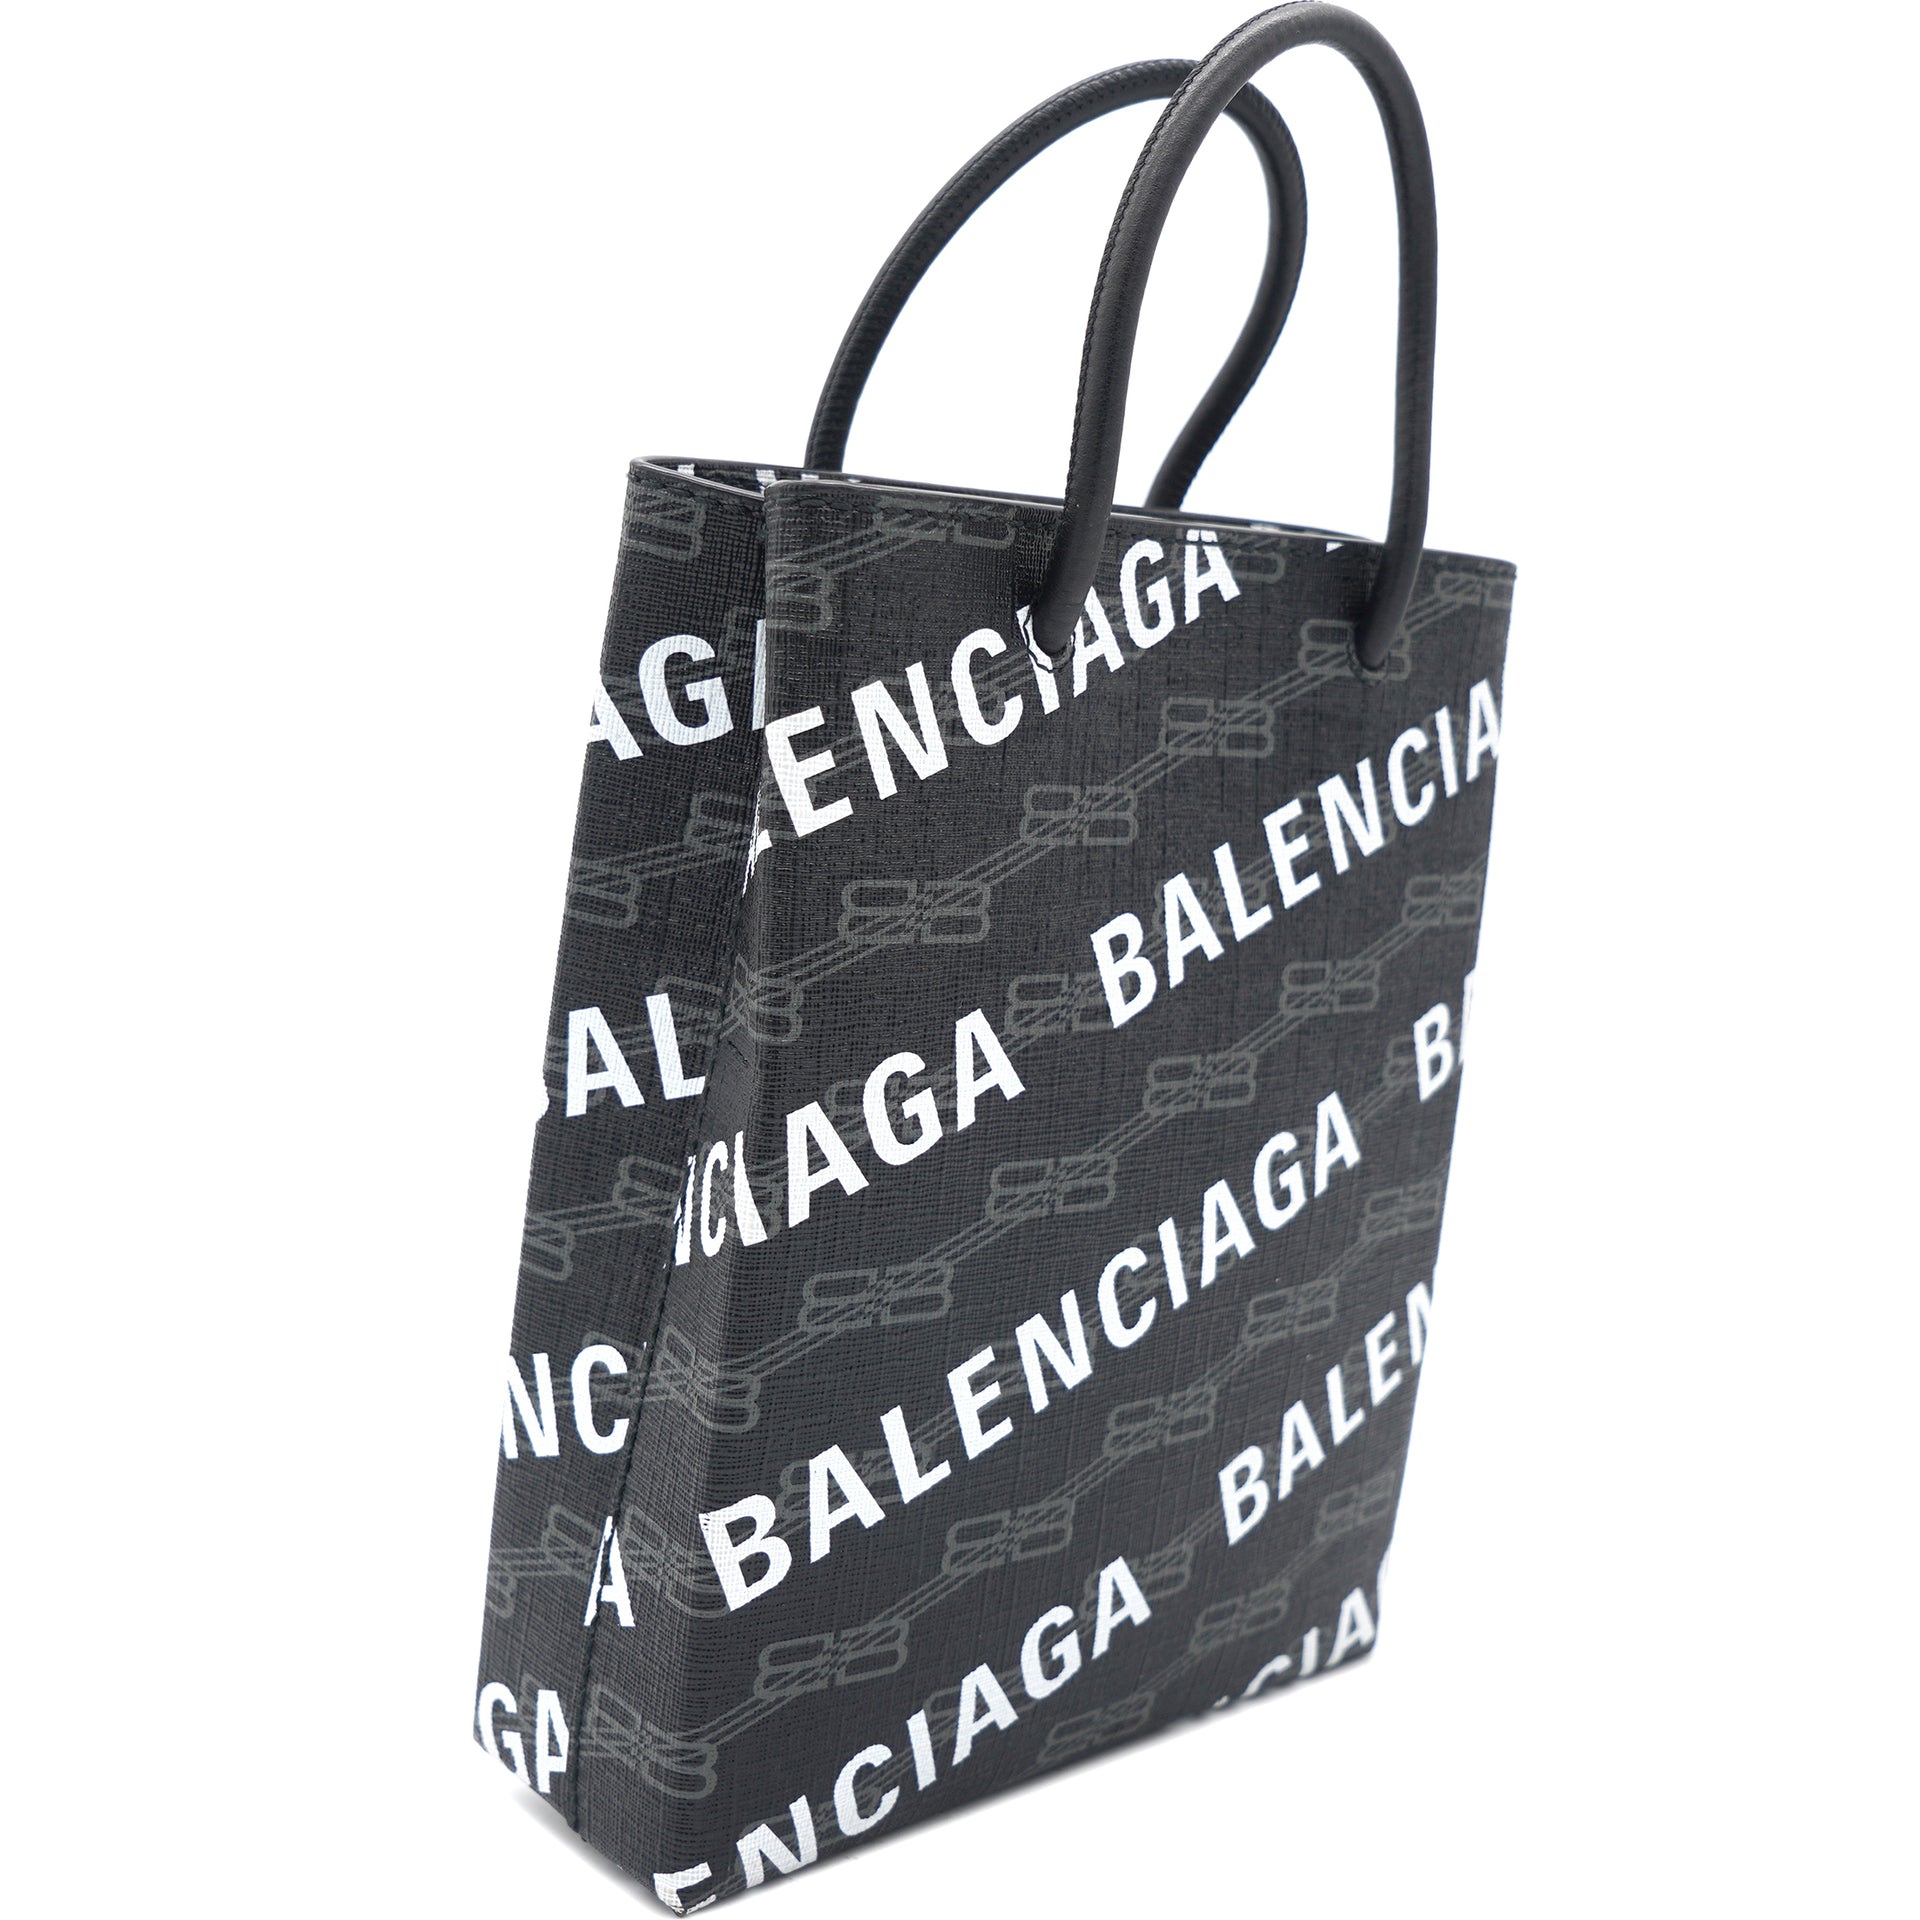 Balenciaga Logo Tote Bag Handbag Black Shearling Authentic